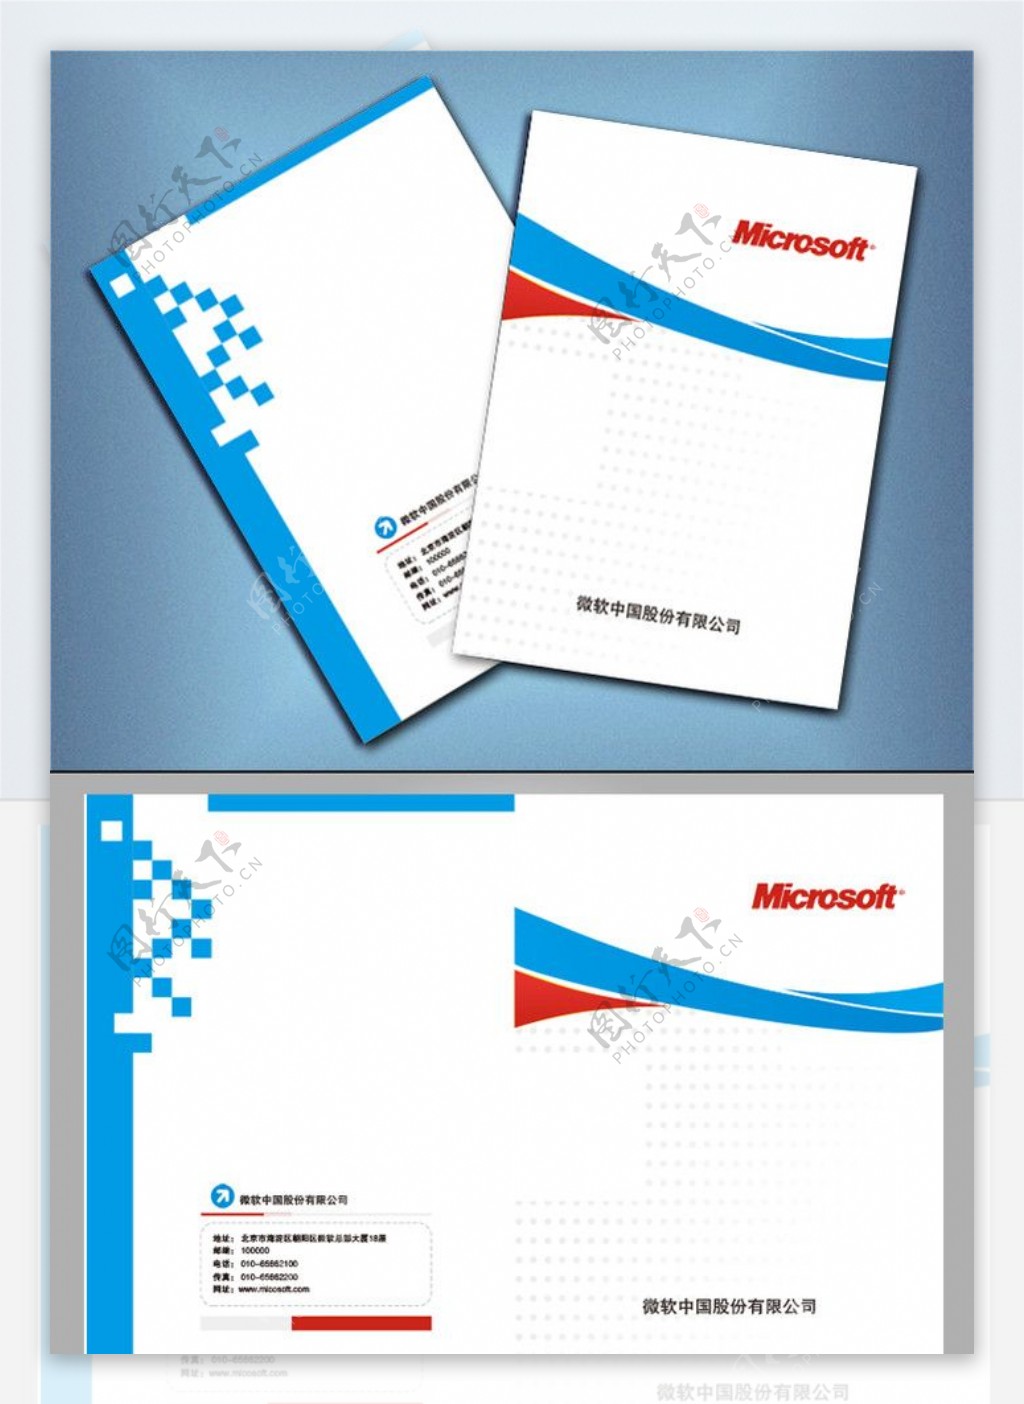 IT科技公司微软画册封面设计图片